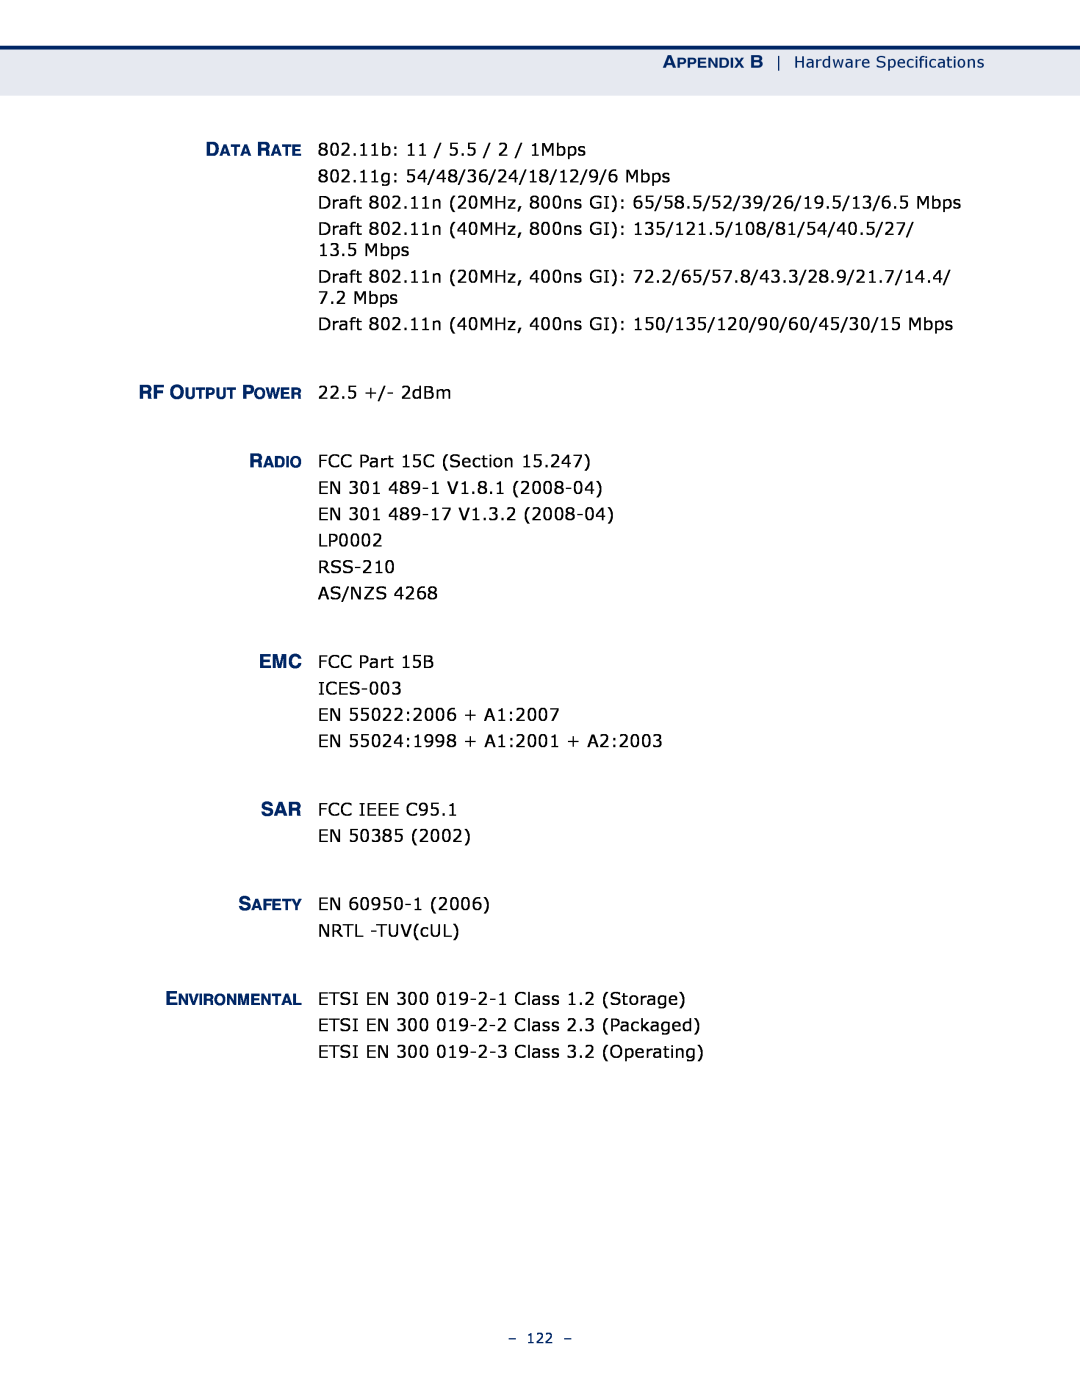 SMC Networks SMCWBR11S-N manual Draft 802.11n 20MHz, 800ns GI 65/58.5/52/39/26/19.5/13/6.5 Mbps 